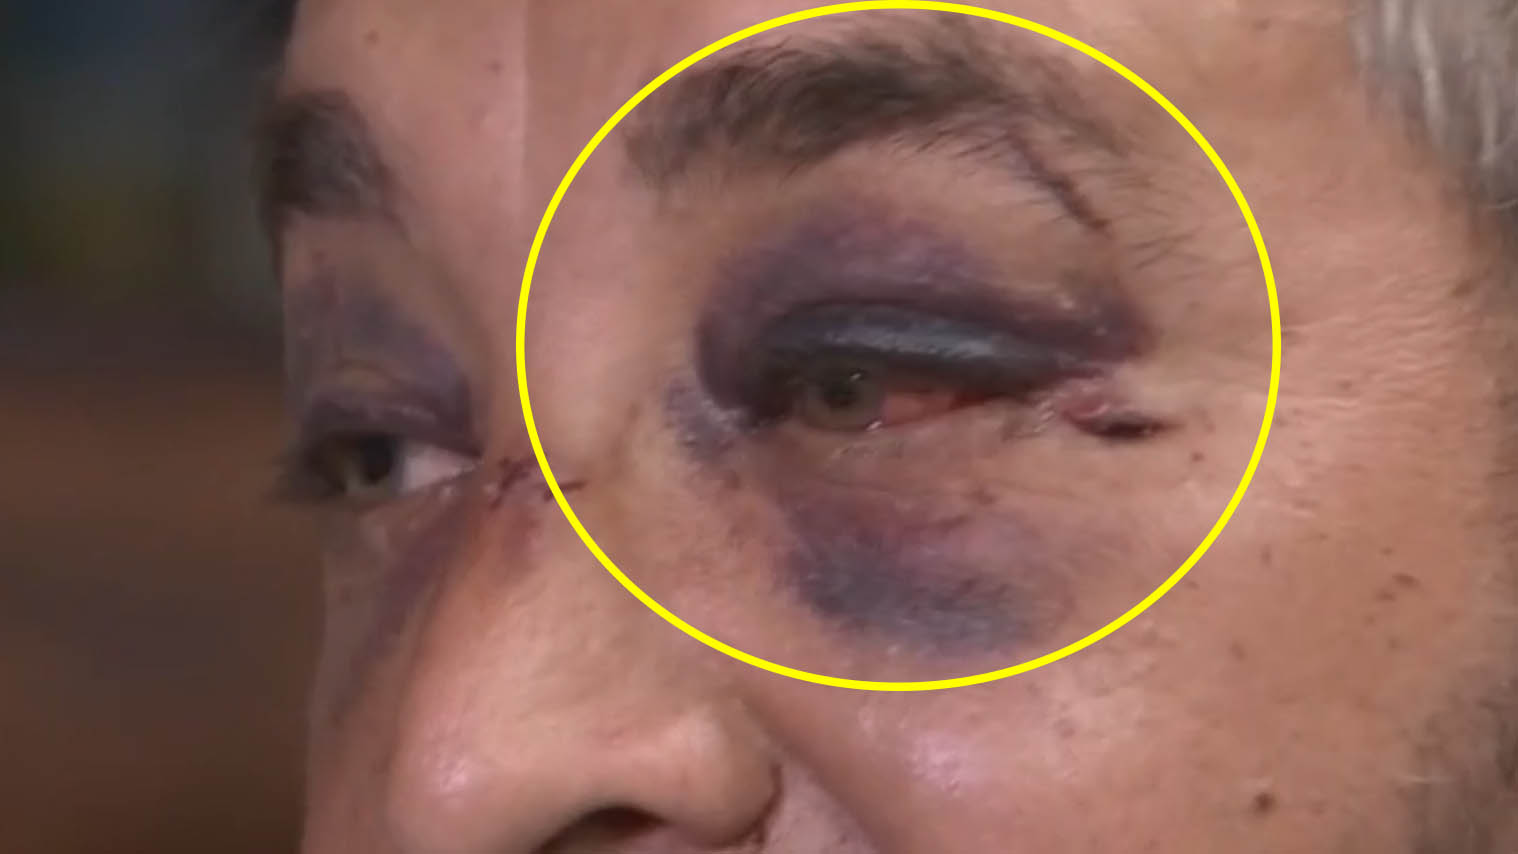 Vince Villanueva bruised face